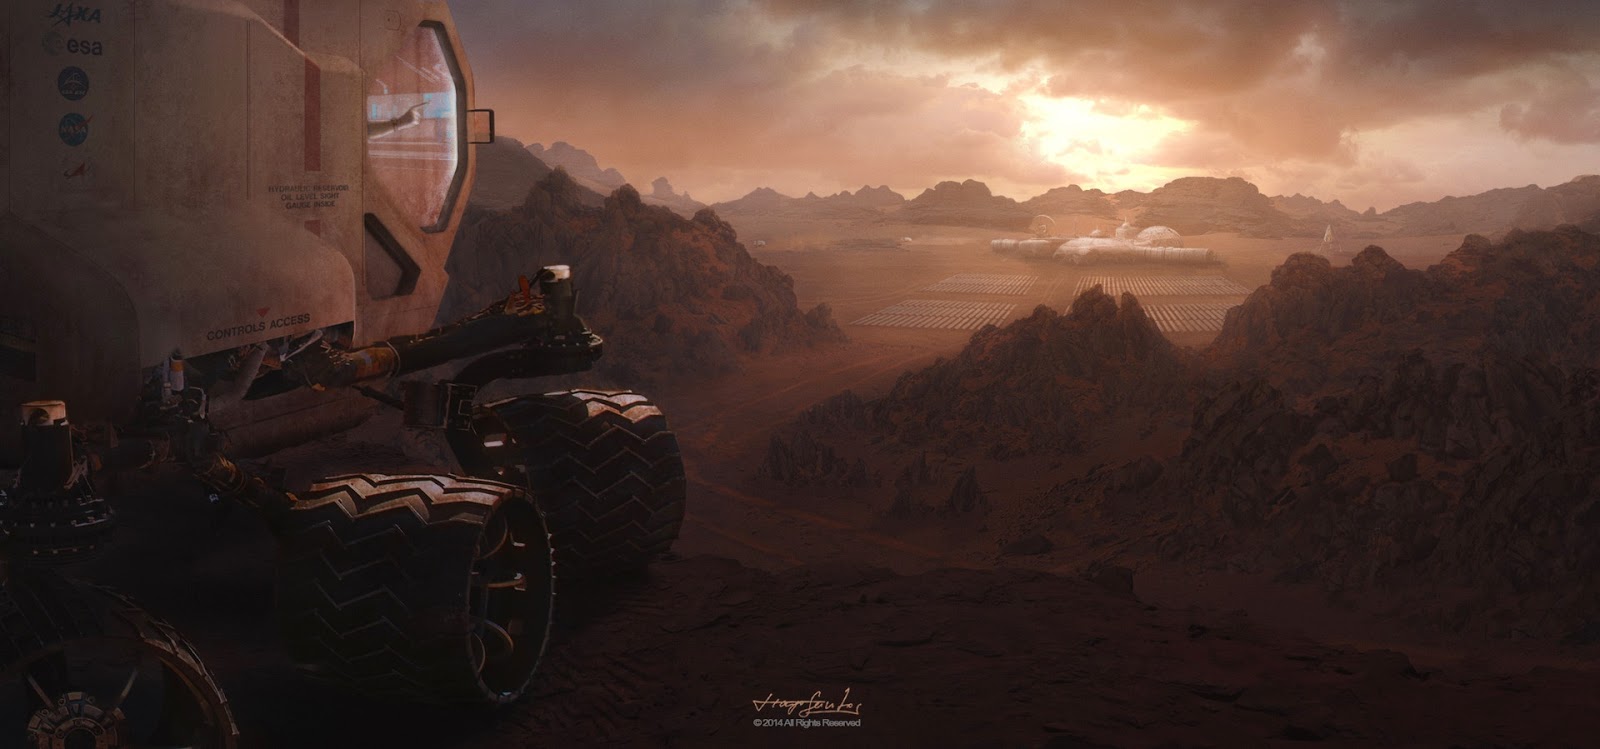 Rover approaching Mars base by Tiago Santos